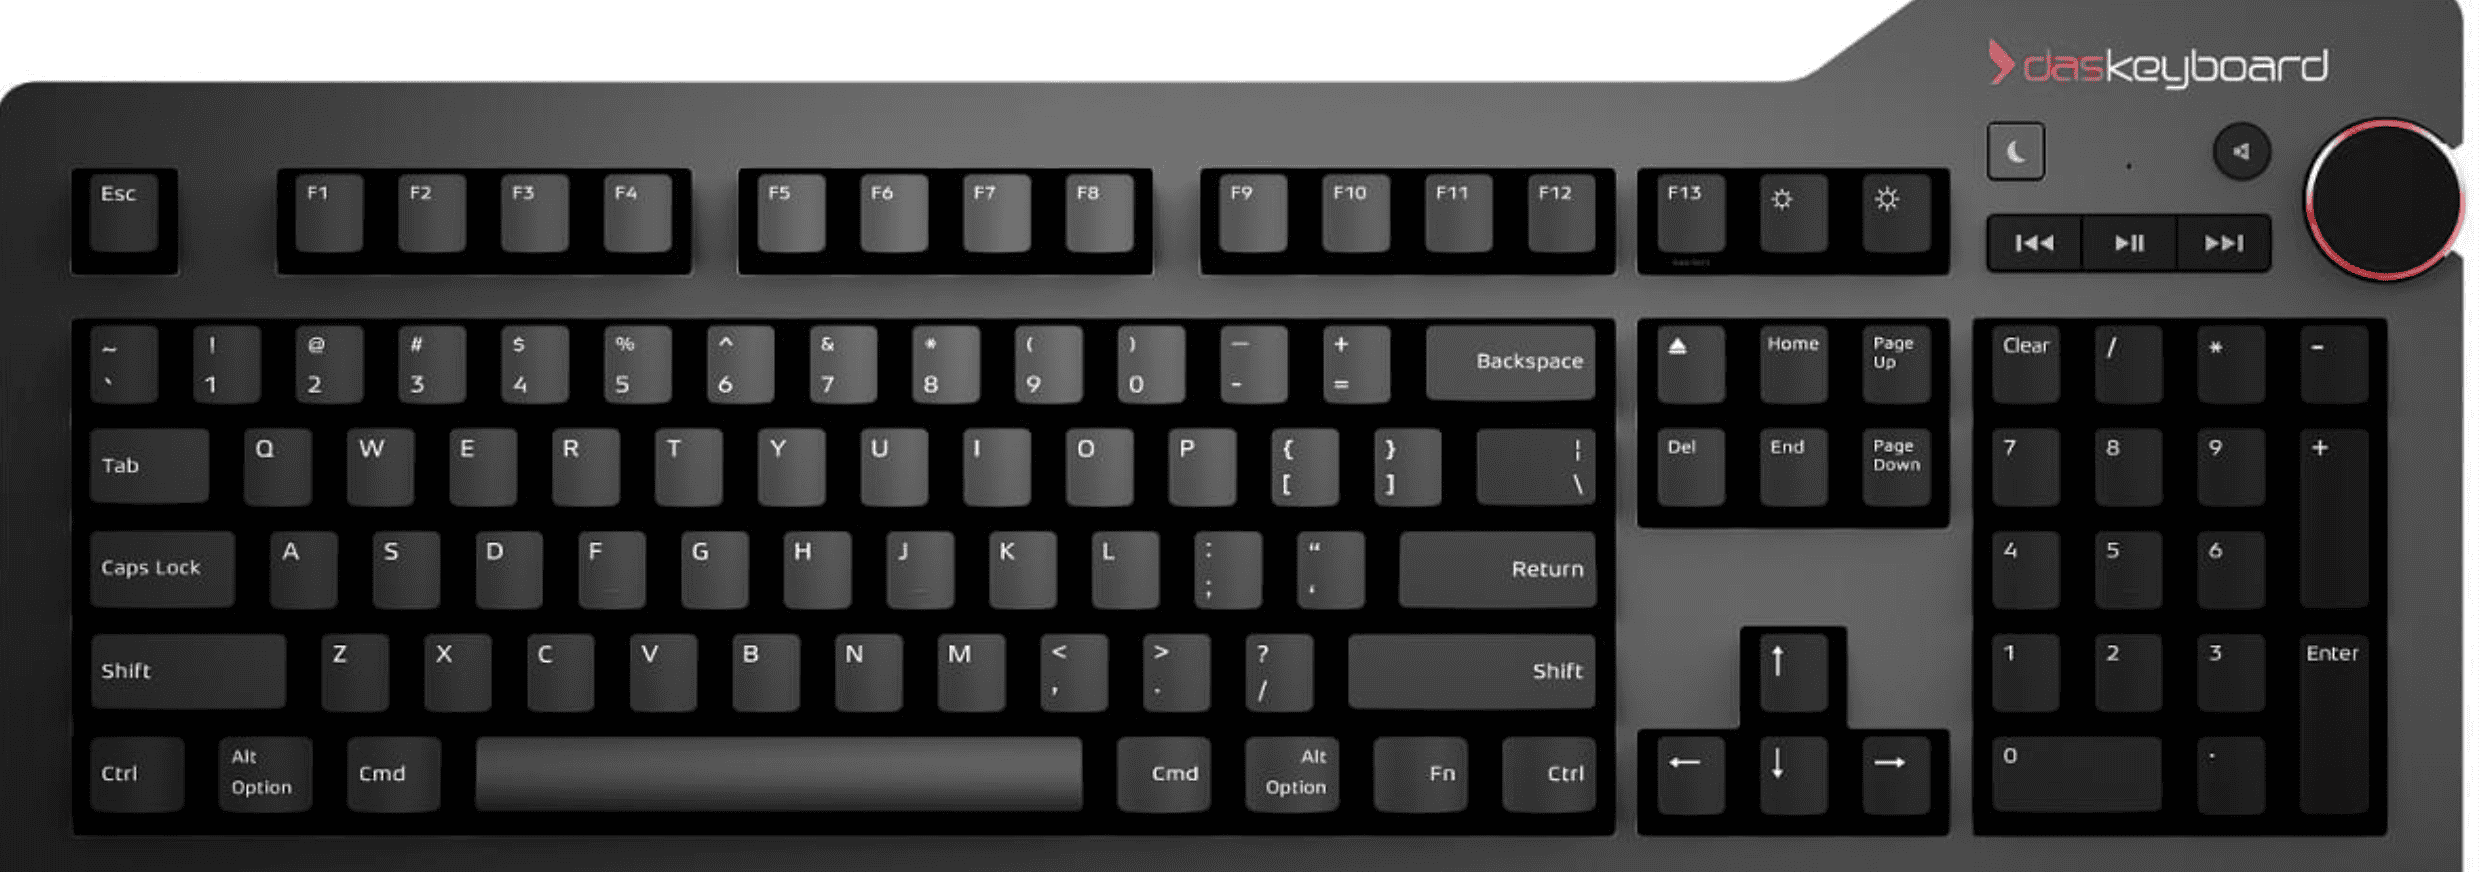 The Das Keyboard for Mac